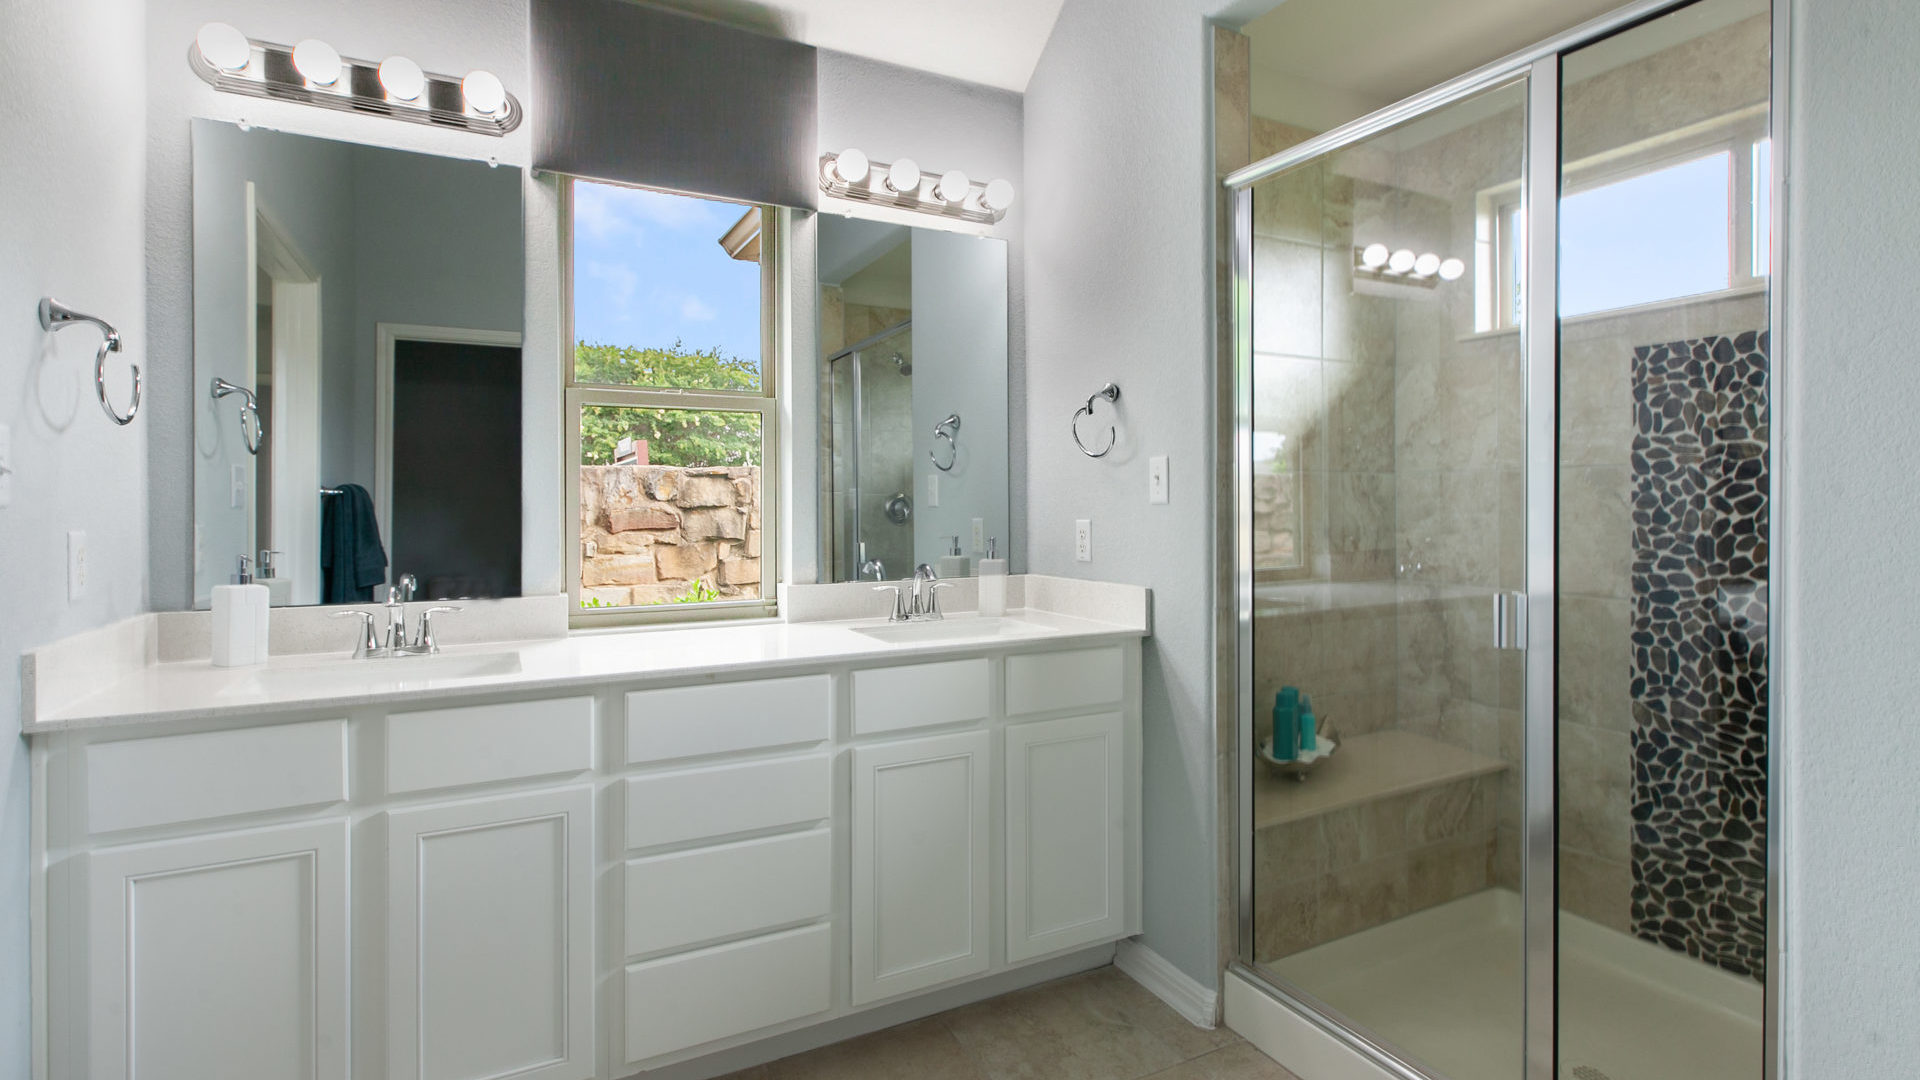 The Campania Blanco Vista Model Home owner's suite bathroom